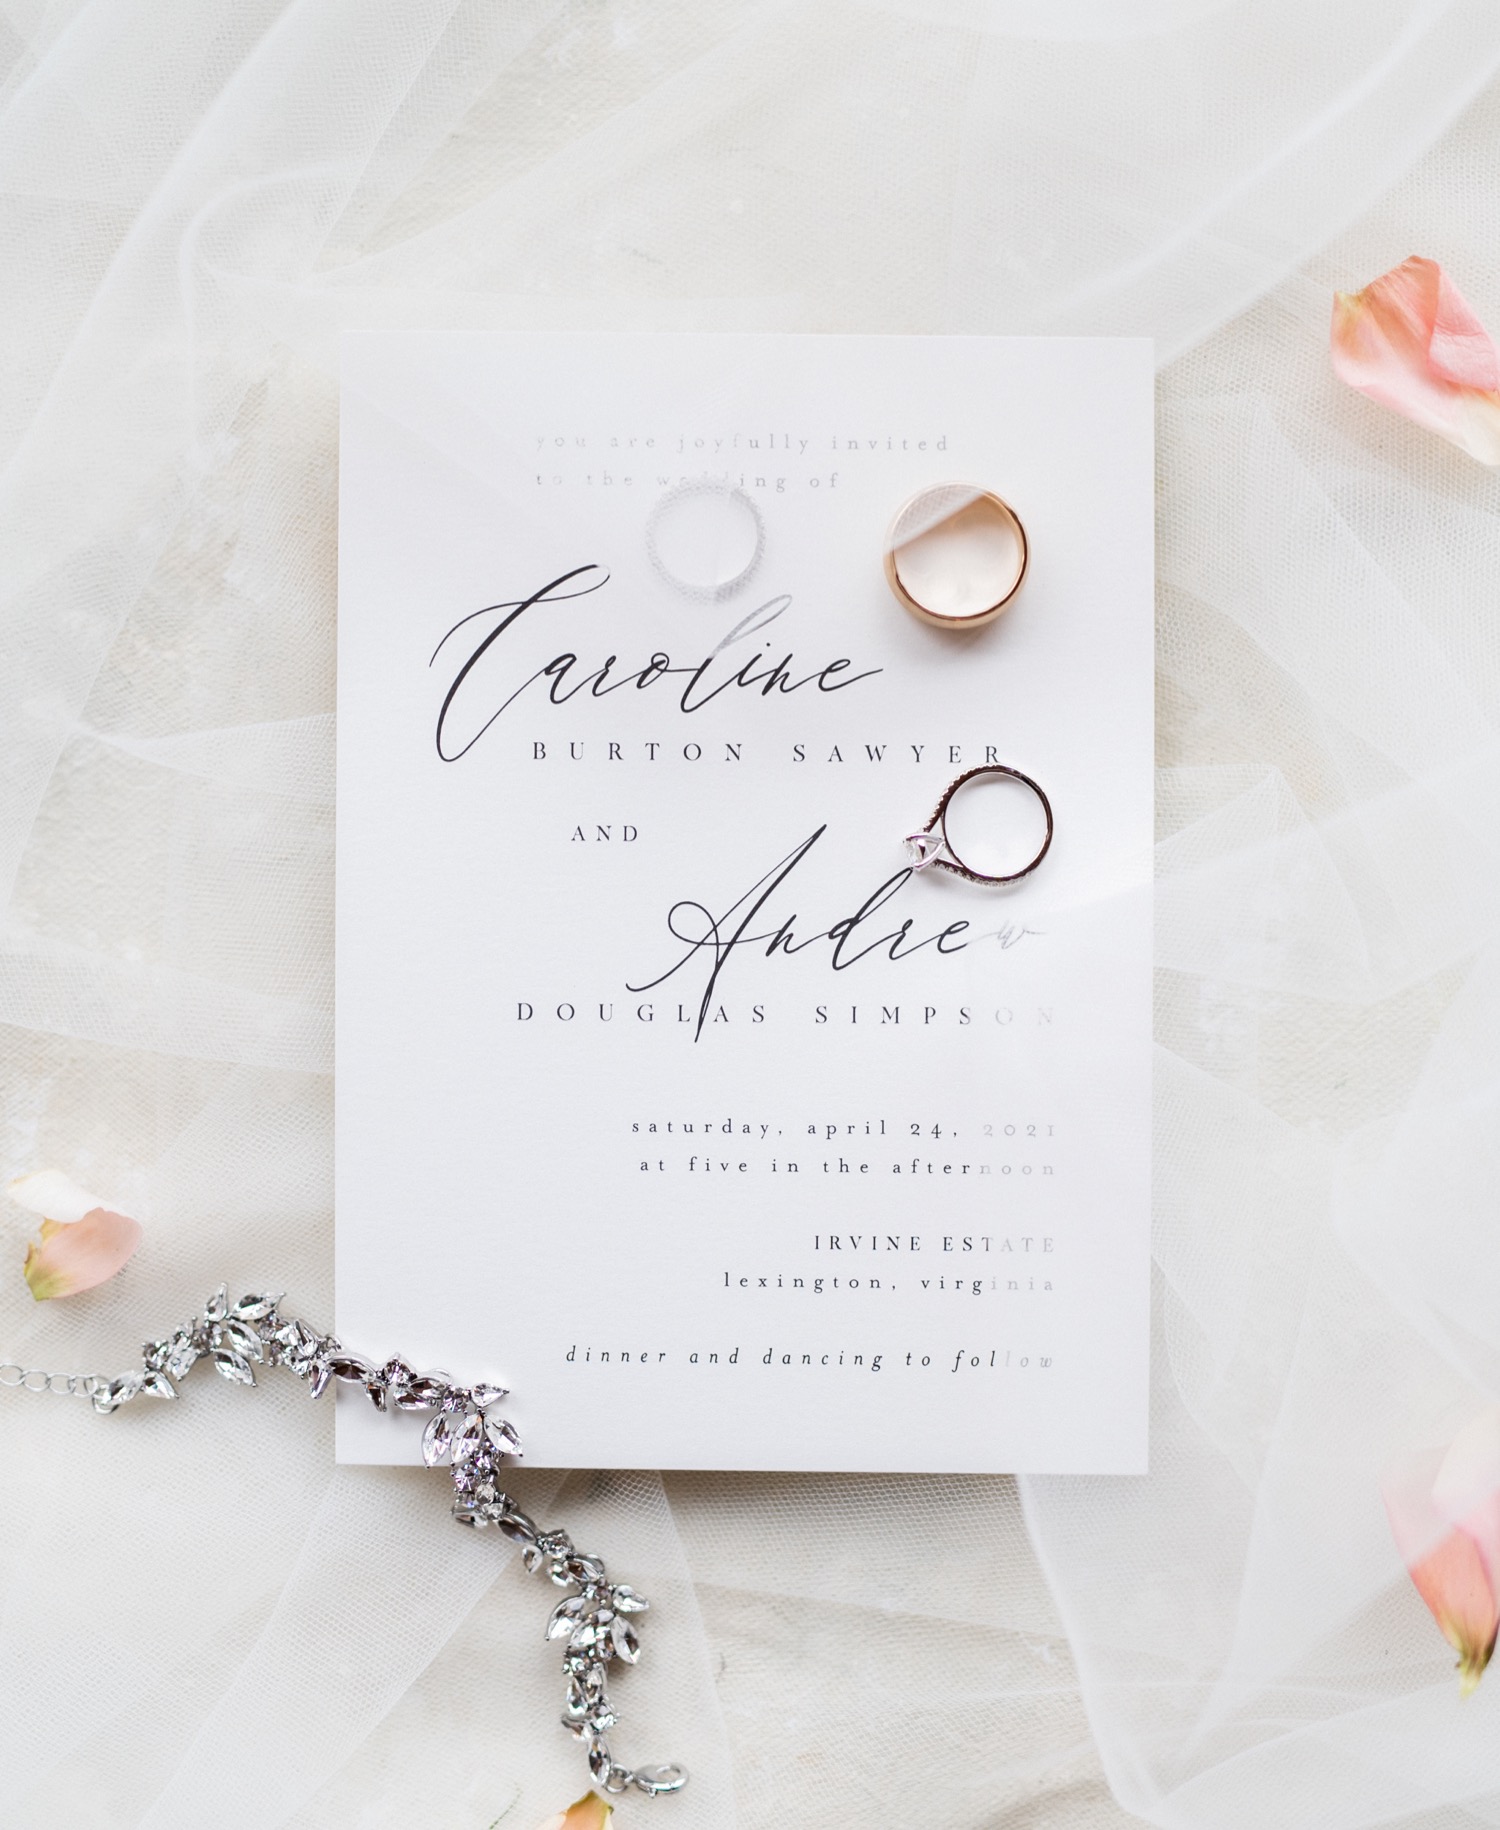 Ring and invitation detail shot at Lexington Virginia wedding